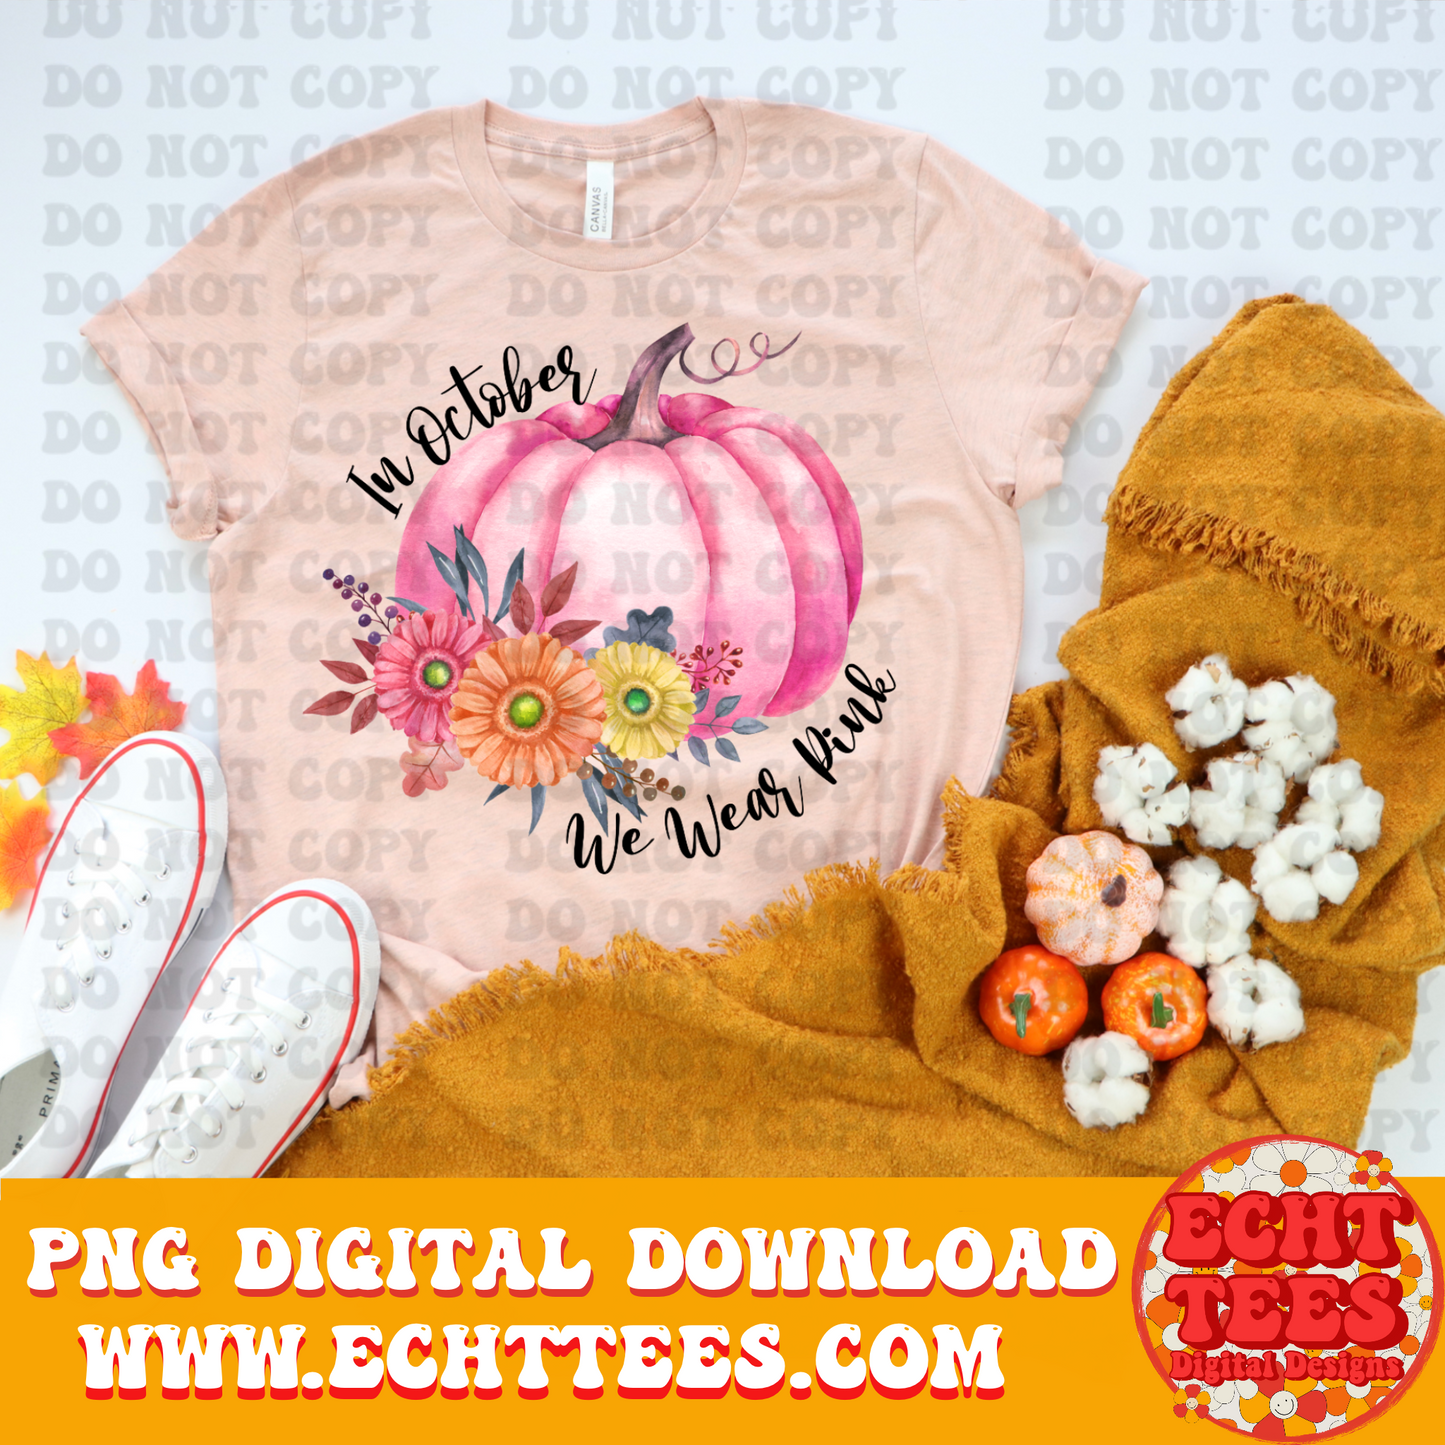 In Oct We Wear Pink PNG Digital Download